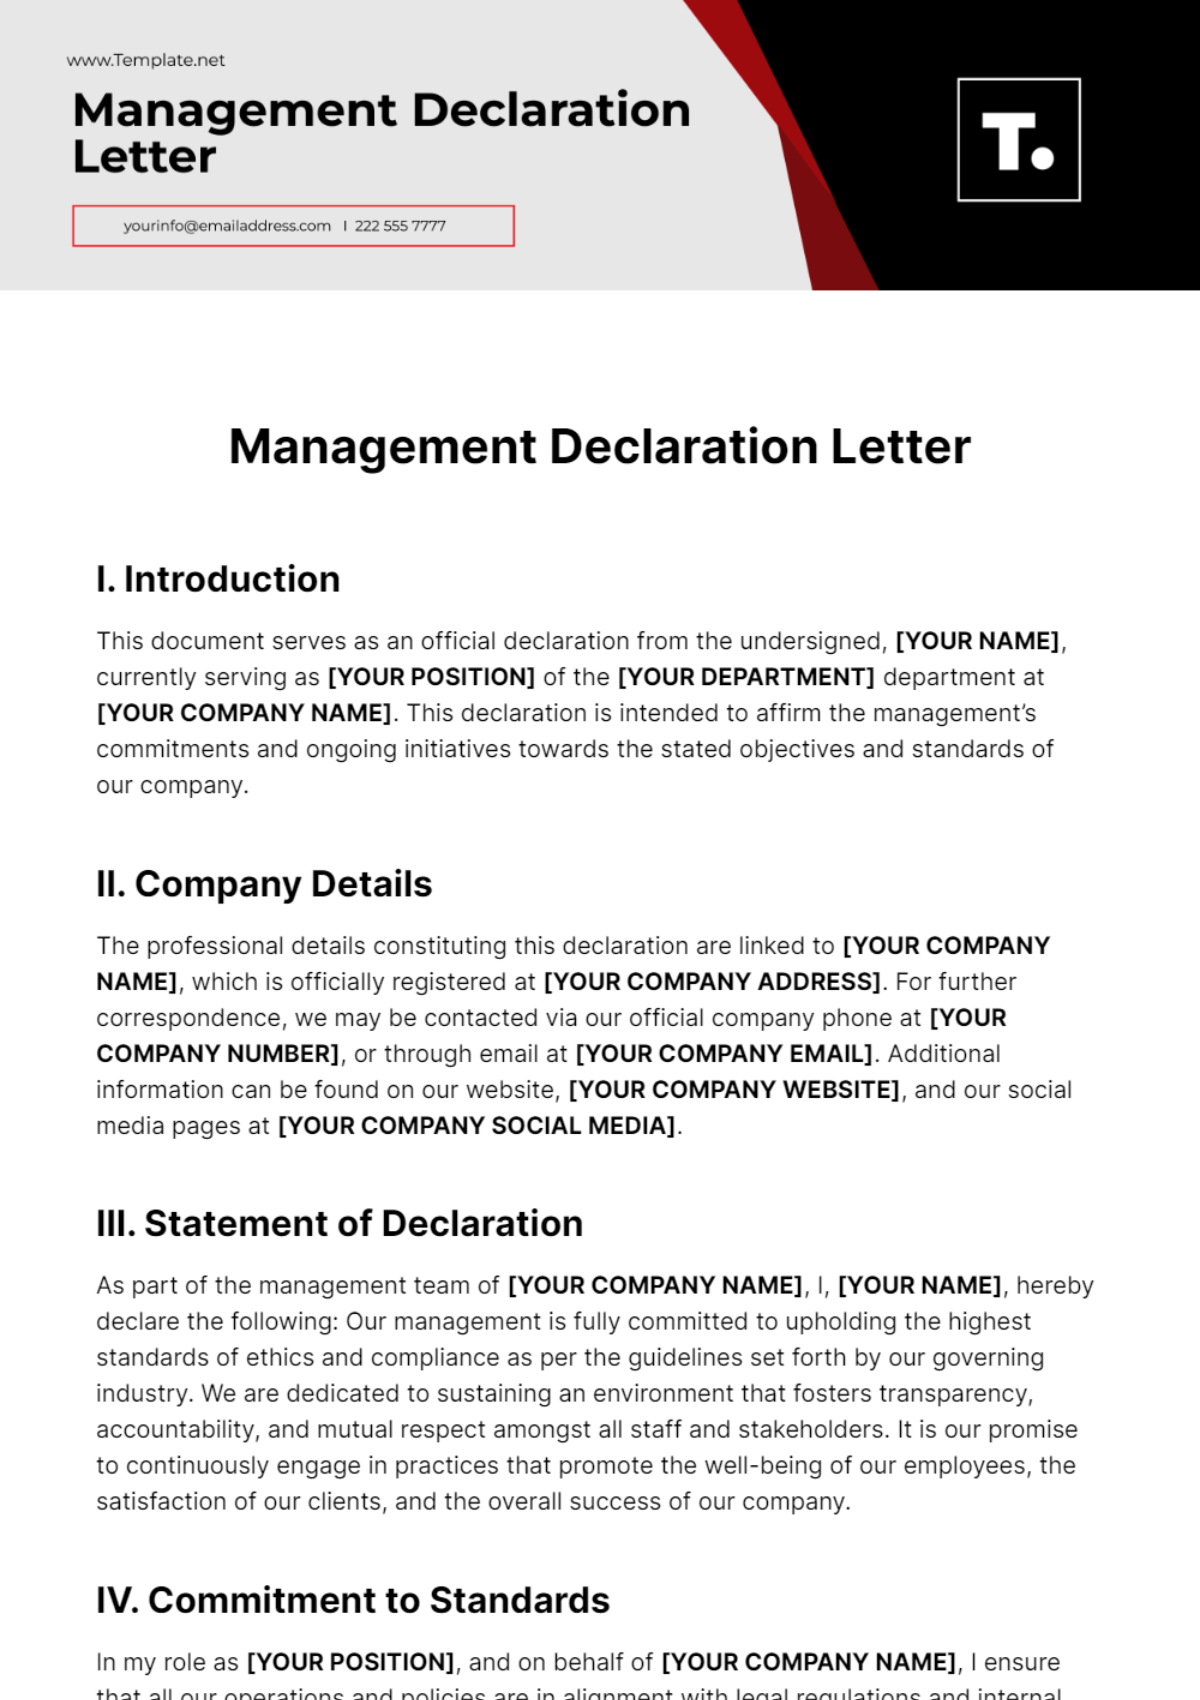 Free Management Declaration Letter Template